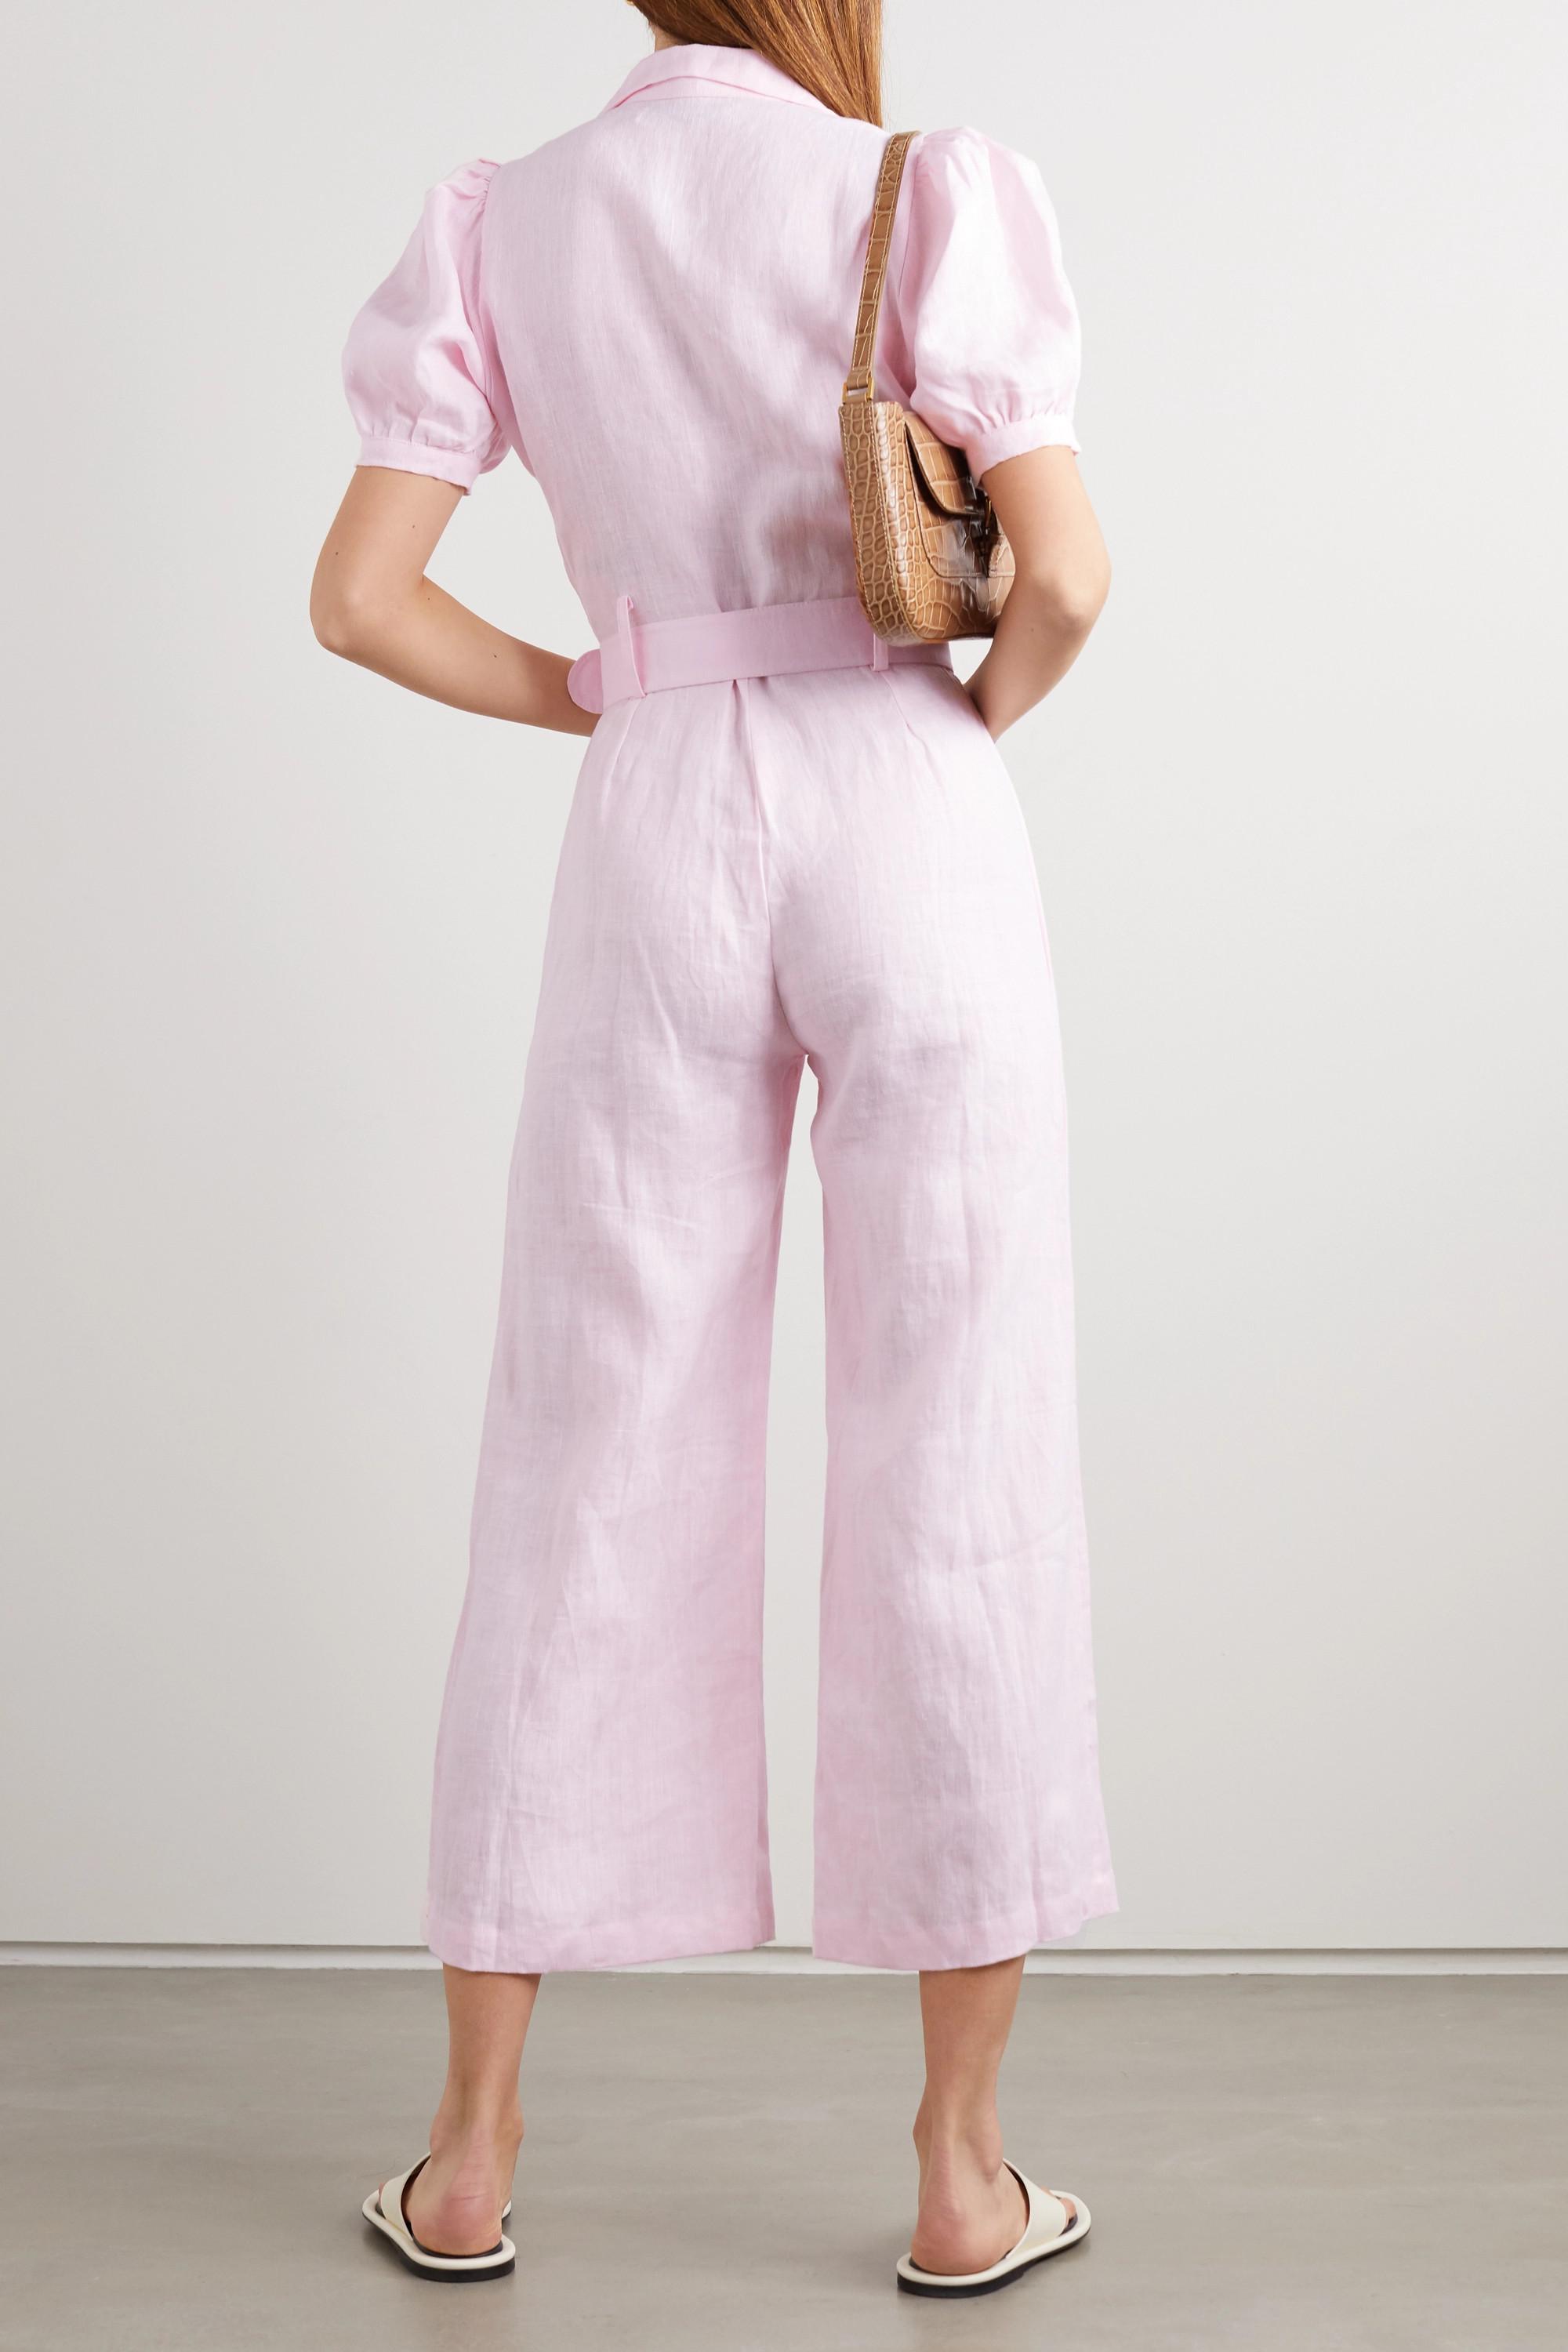 https://cdna.lystit.com/photos/net-a-porter/50e61c92/faithfull-the-brand-pastel-pink-Net-Sustain-Frederikke-Belted-Linen-Jumpsuit.jpeg